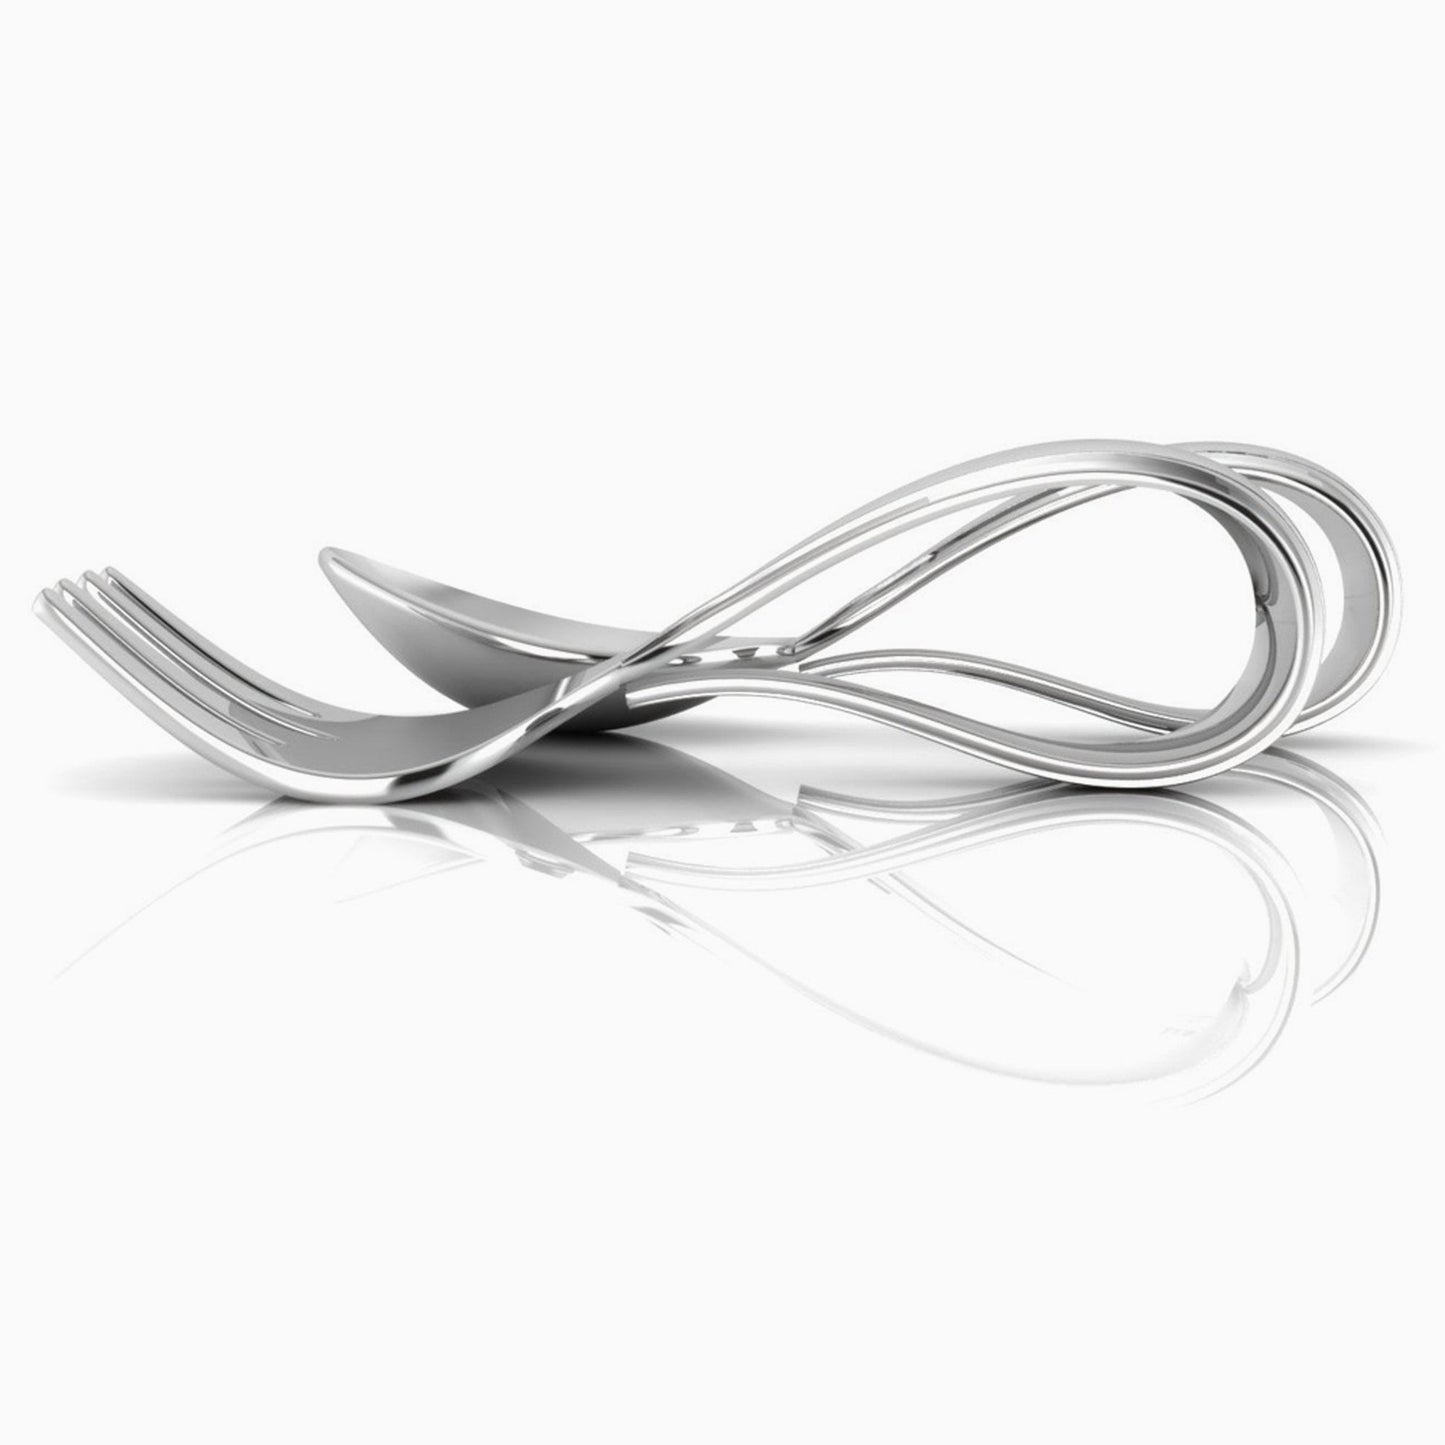 Bent Curved Sterling Silver Baby Spoon & Fork Set by Krysaliis